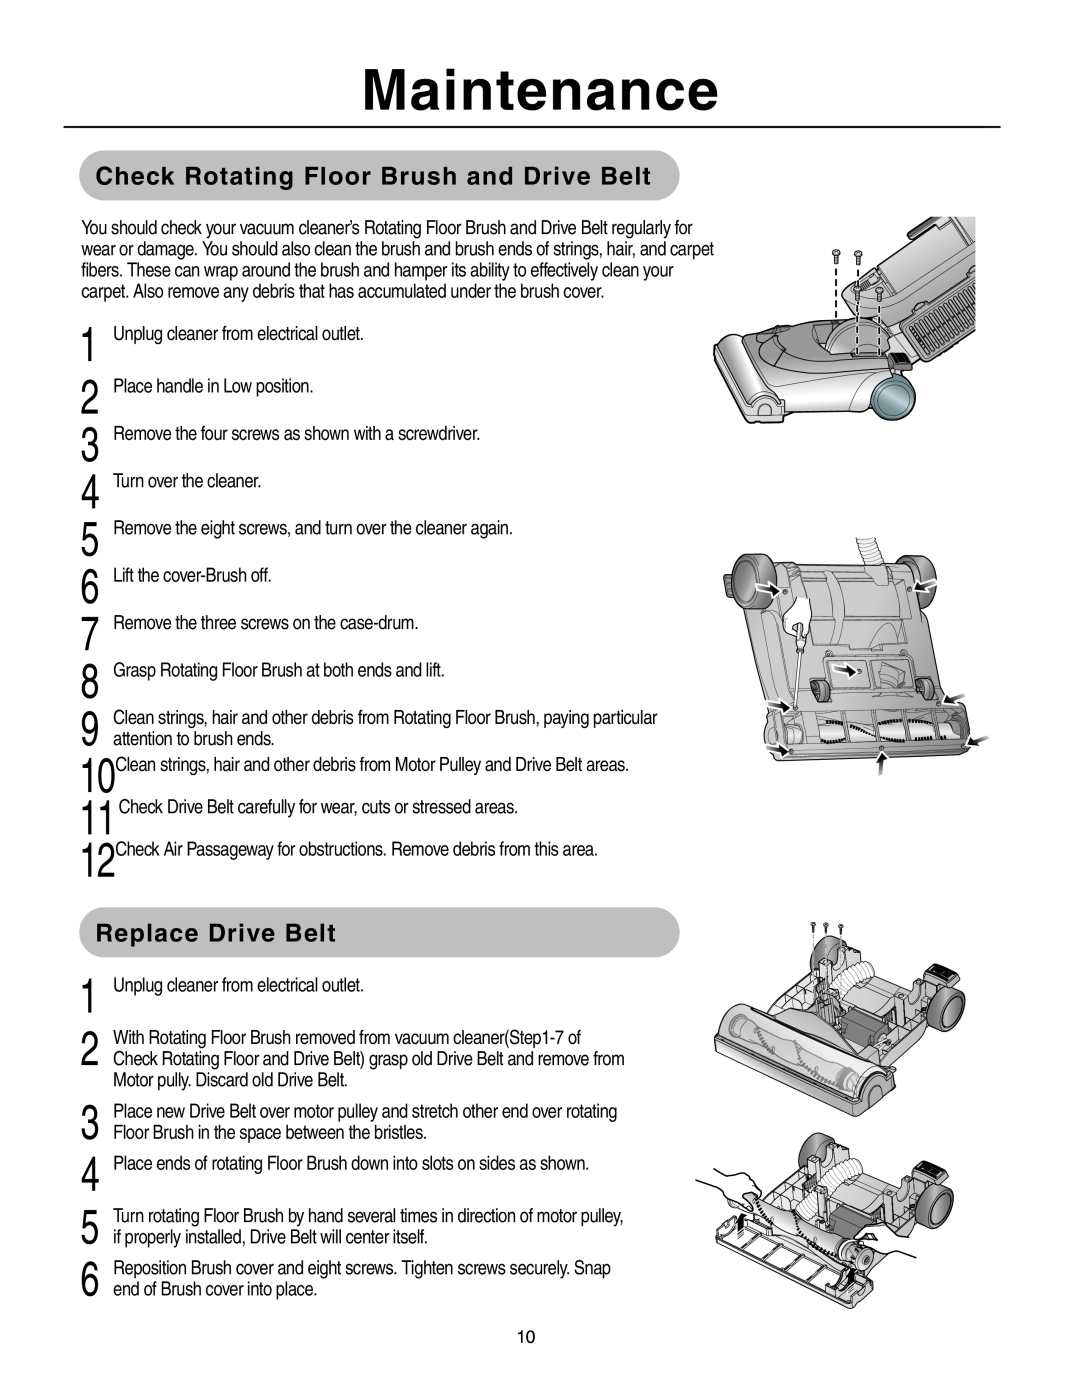 Samsung SU-8500 operating instructions 2 3, Check Rotating Floor Brush and Drive Belt, Maintenance 